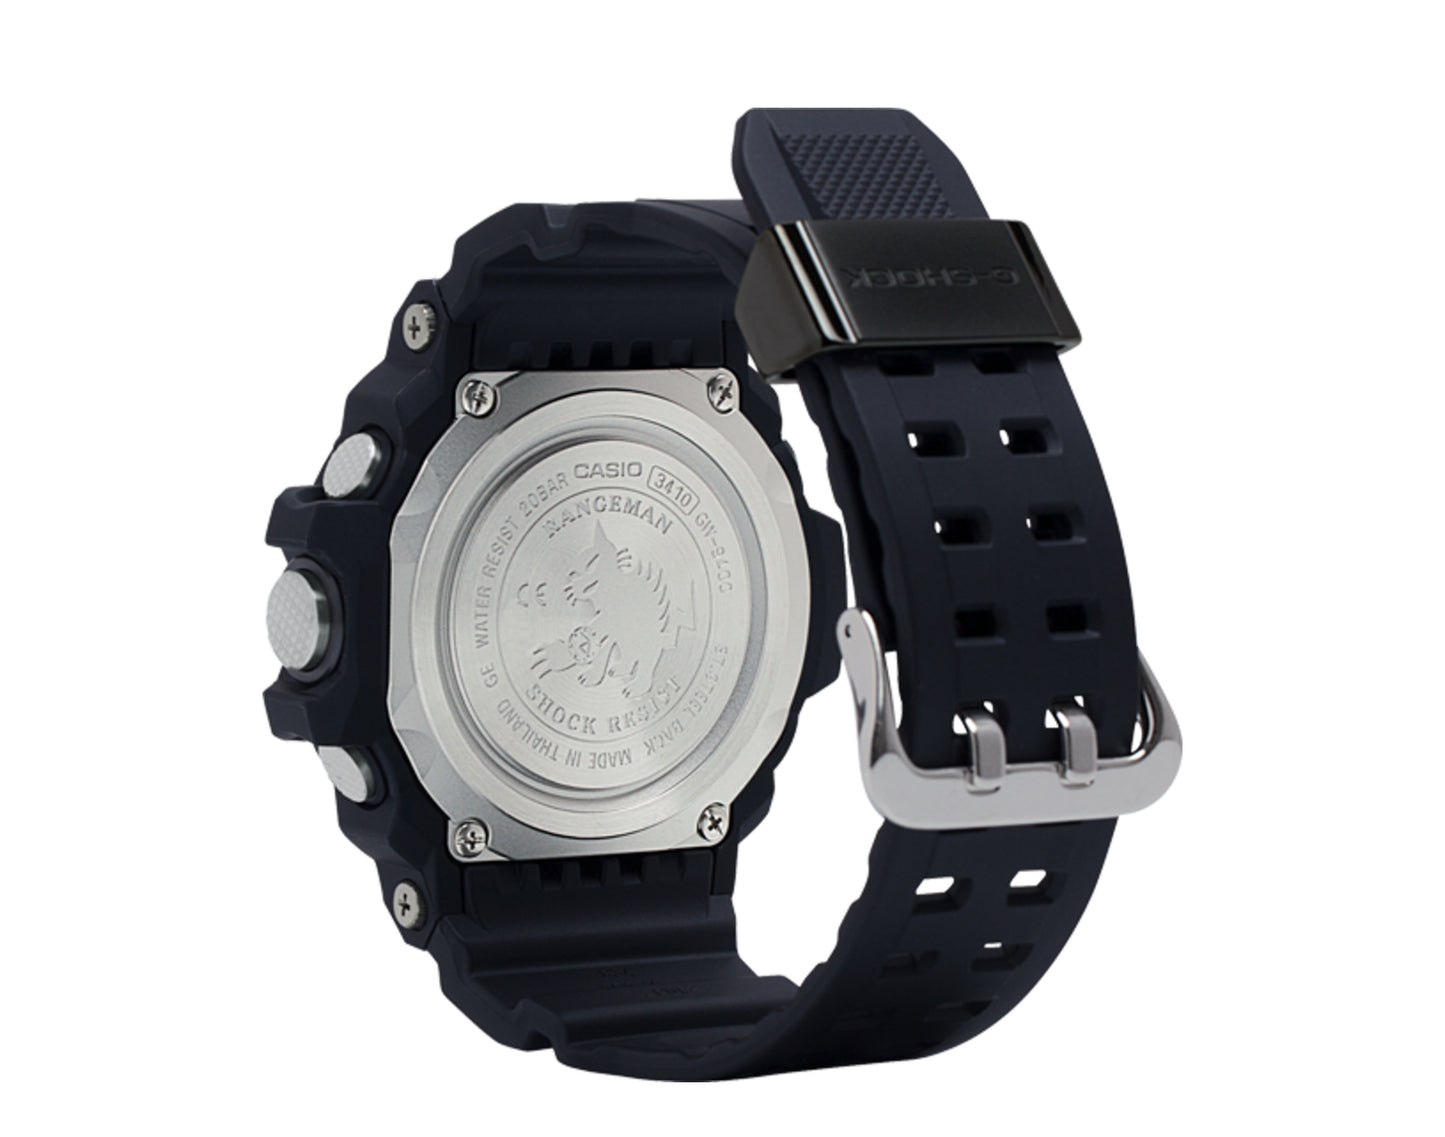 Casio G-Shock GW9400 RangeMan Blackout Digital Resin Men's Watch GW9400-1B